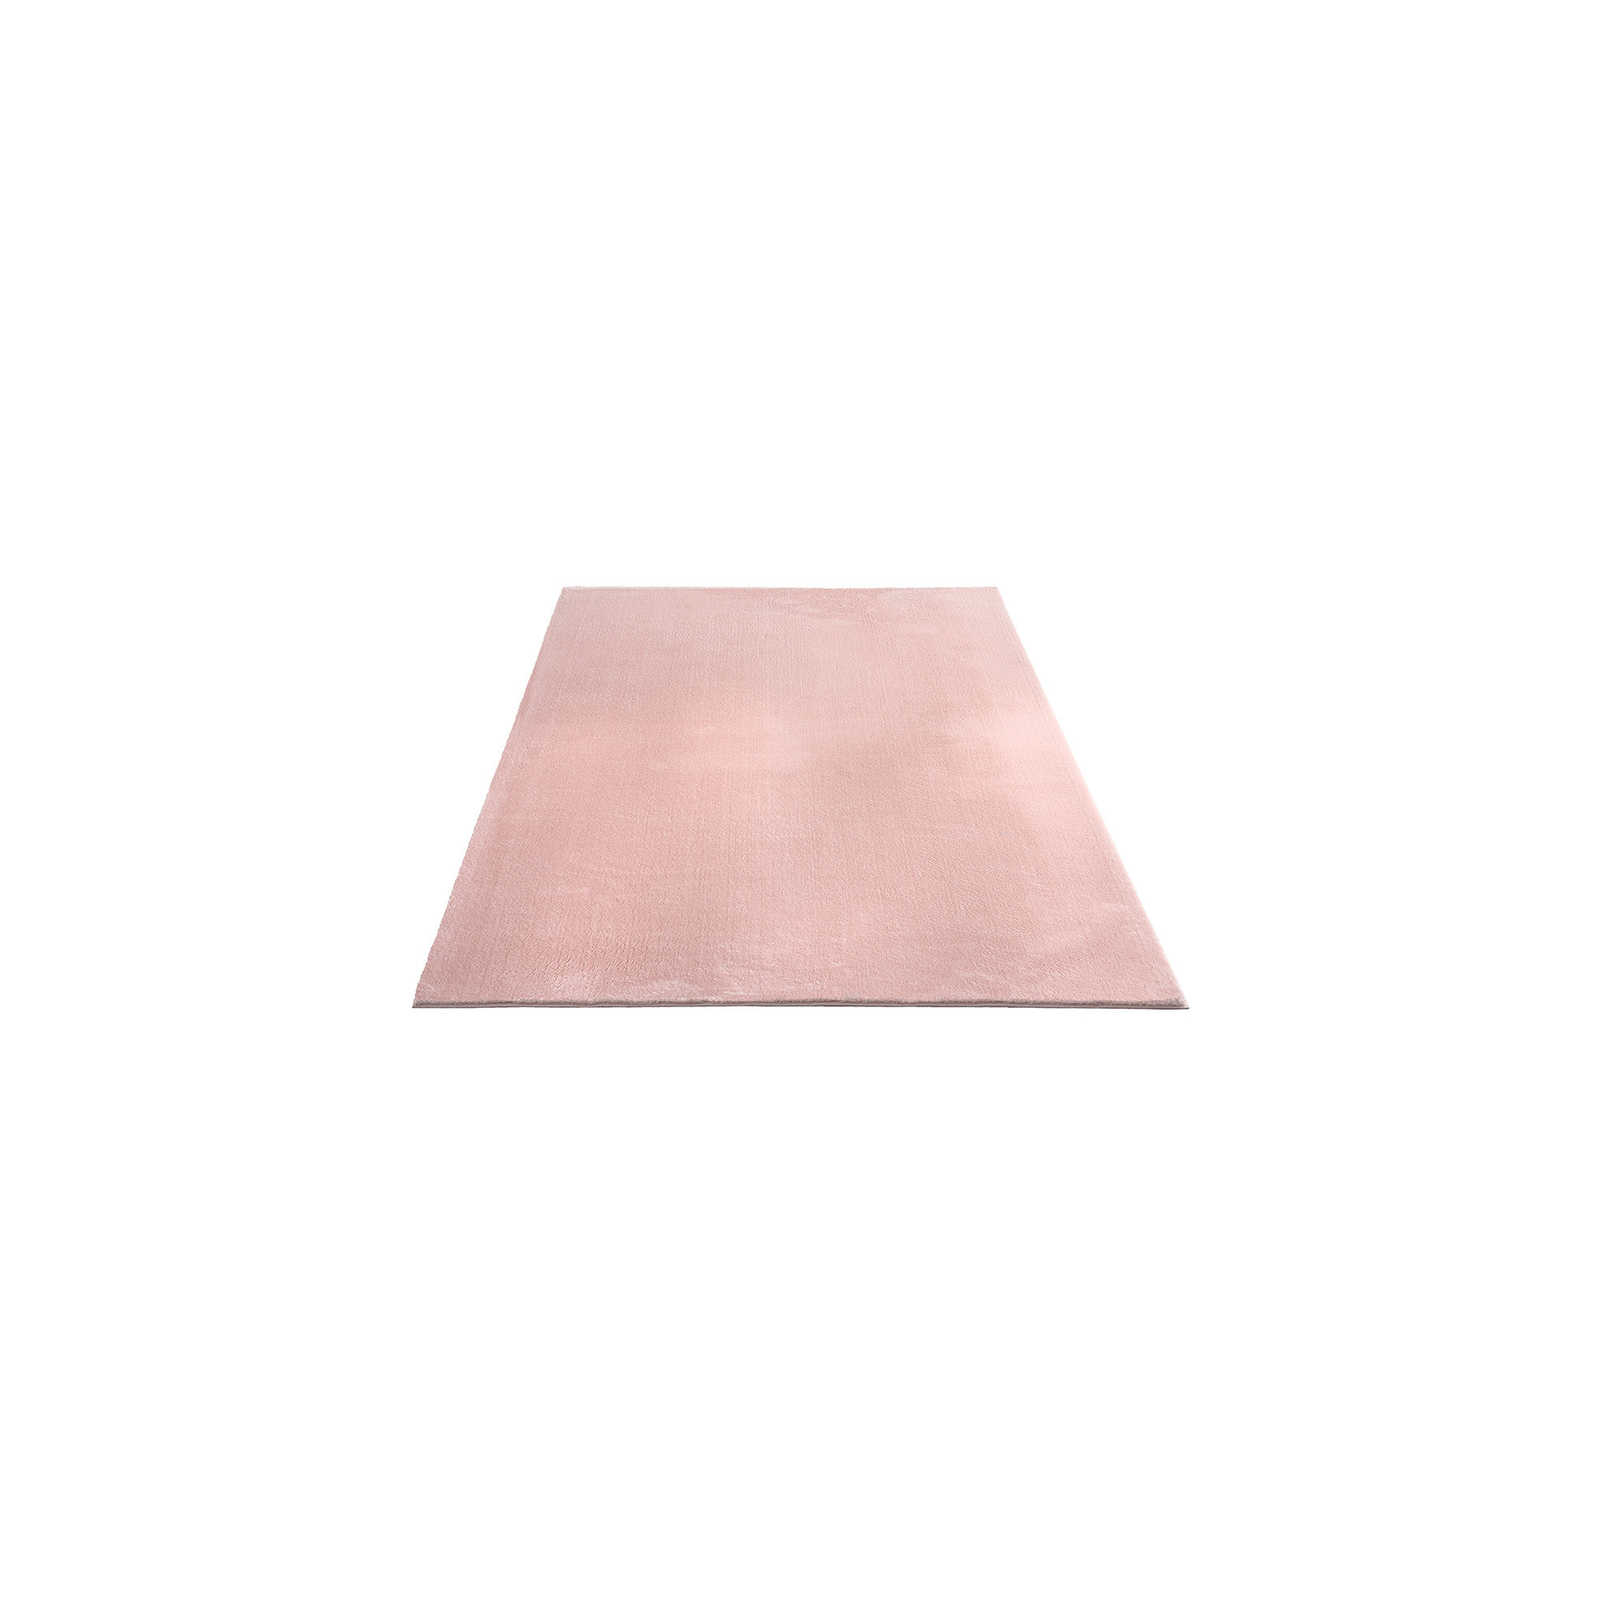 Delicate pile carpet in pink - 170 x 120 cm
